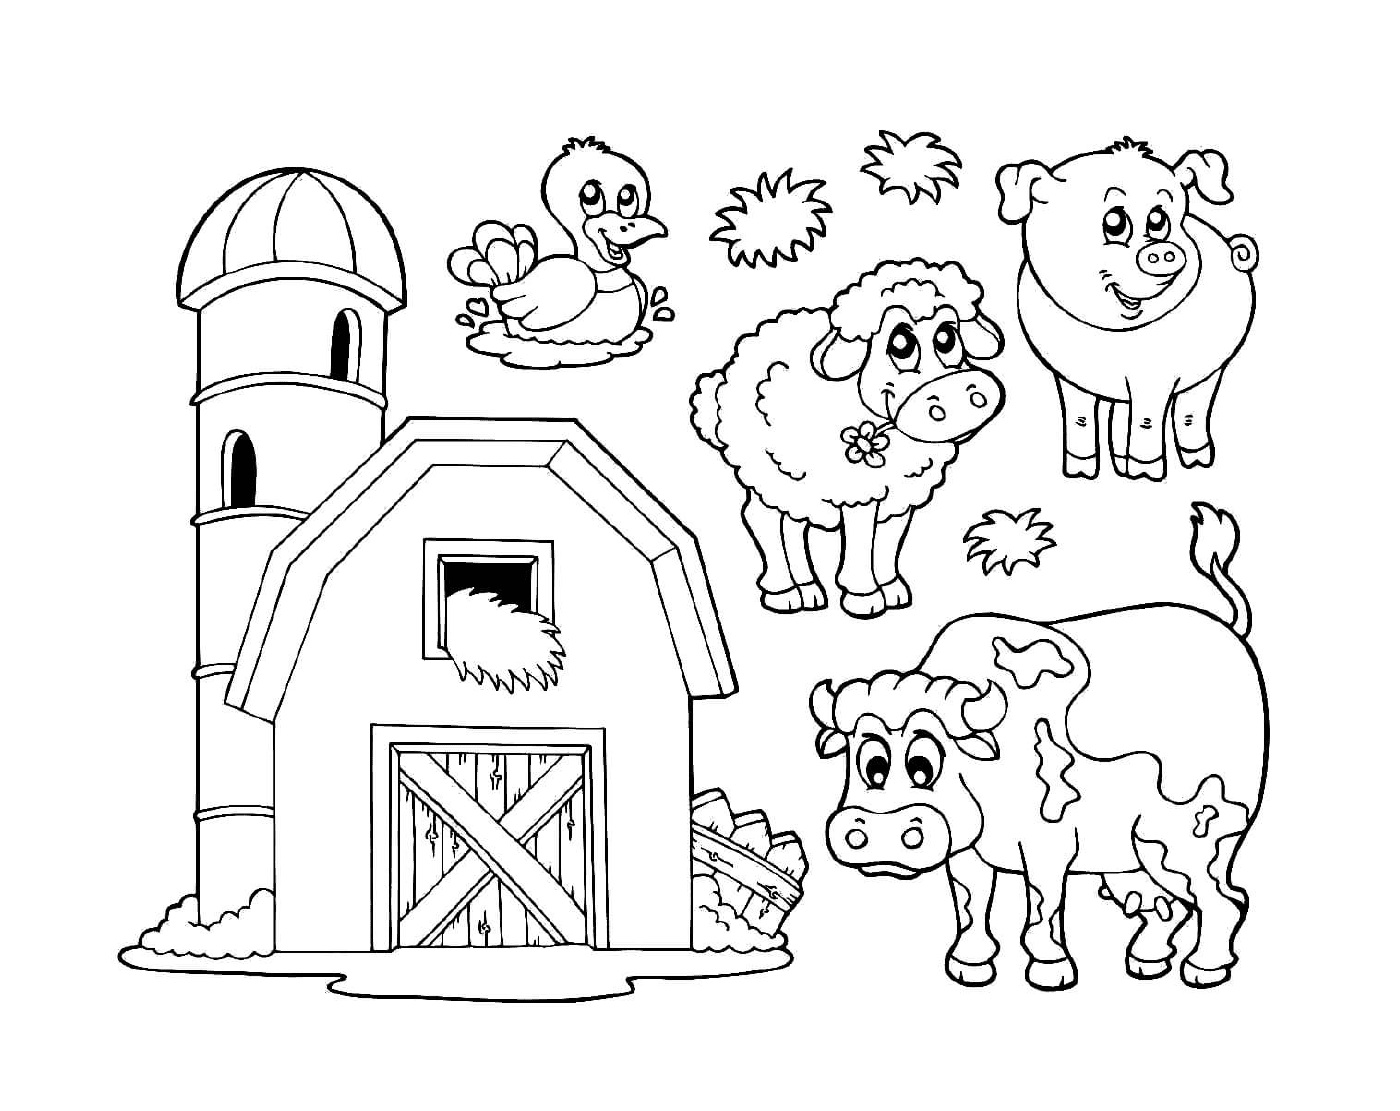  a set of farm animals 